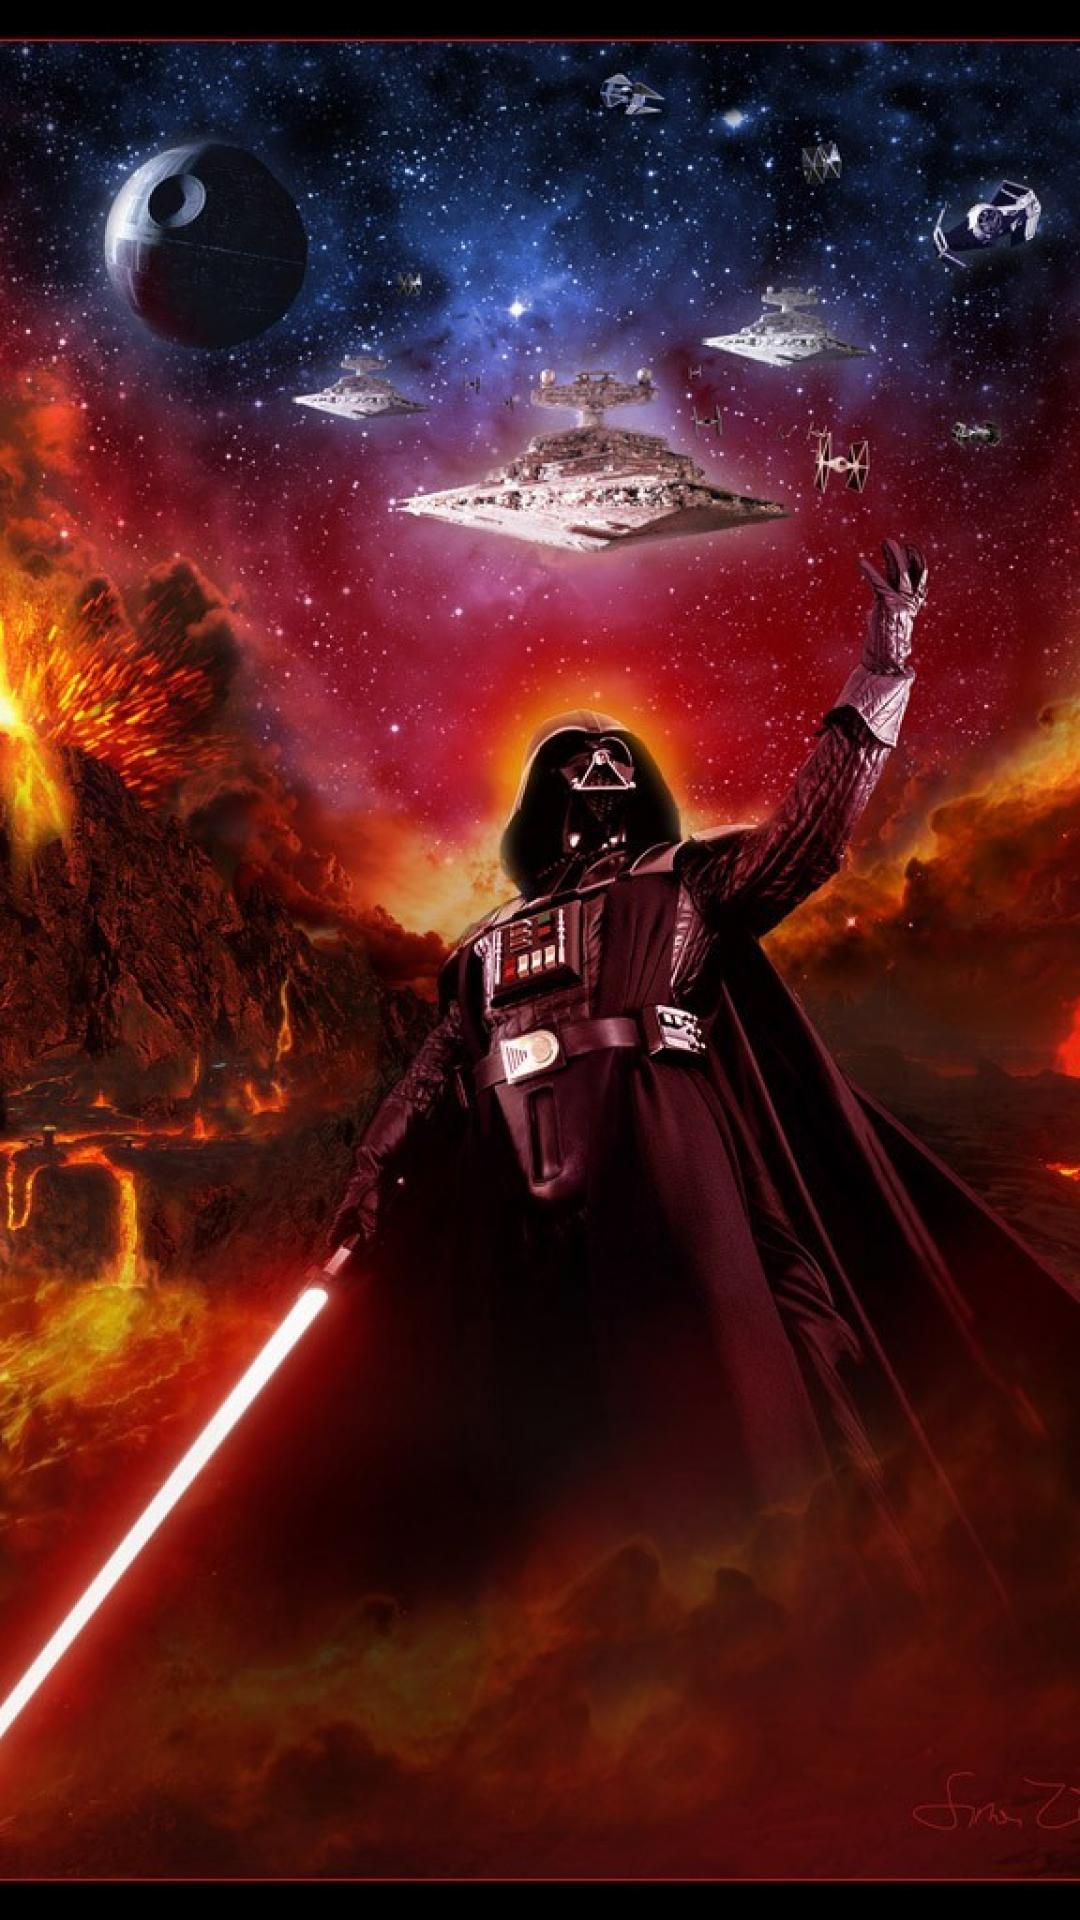 4K wallpaper: Star Wars Darth Vader Wallpaper Mobile